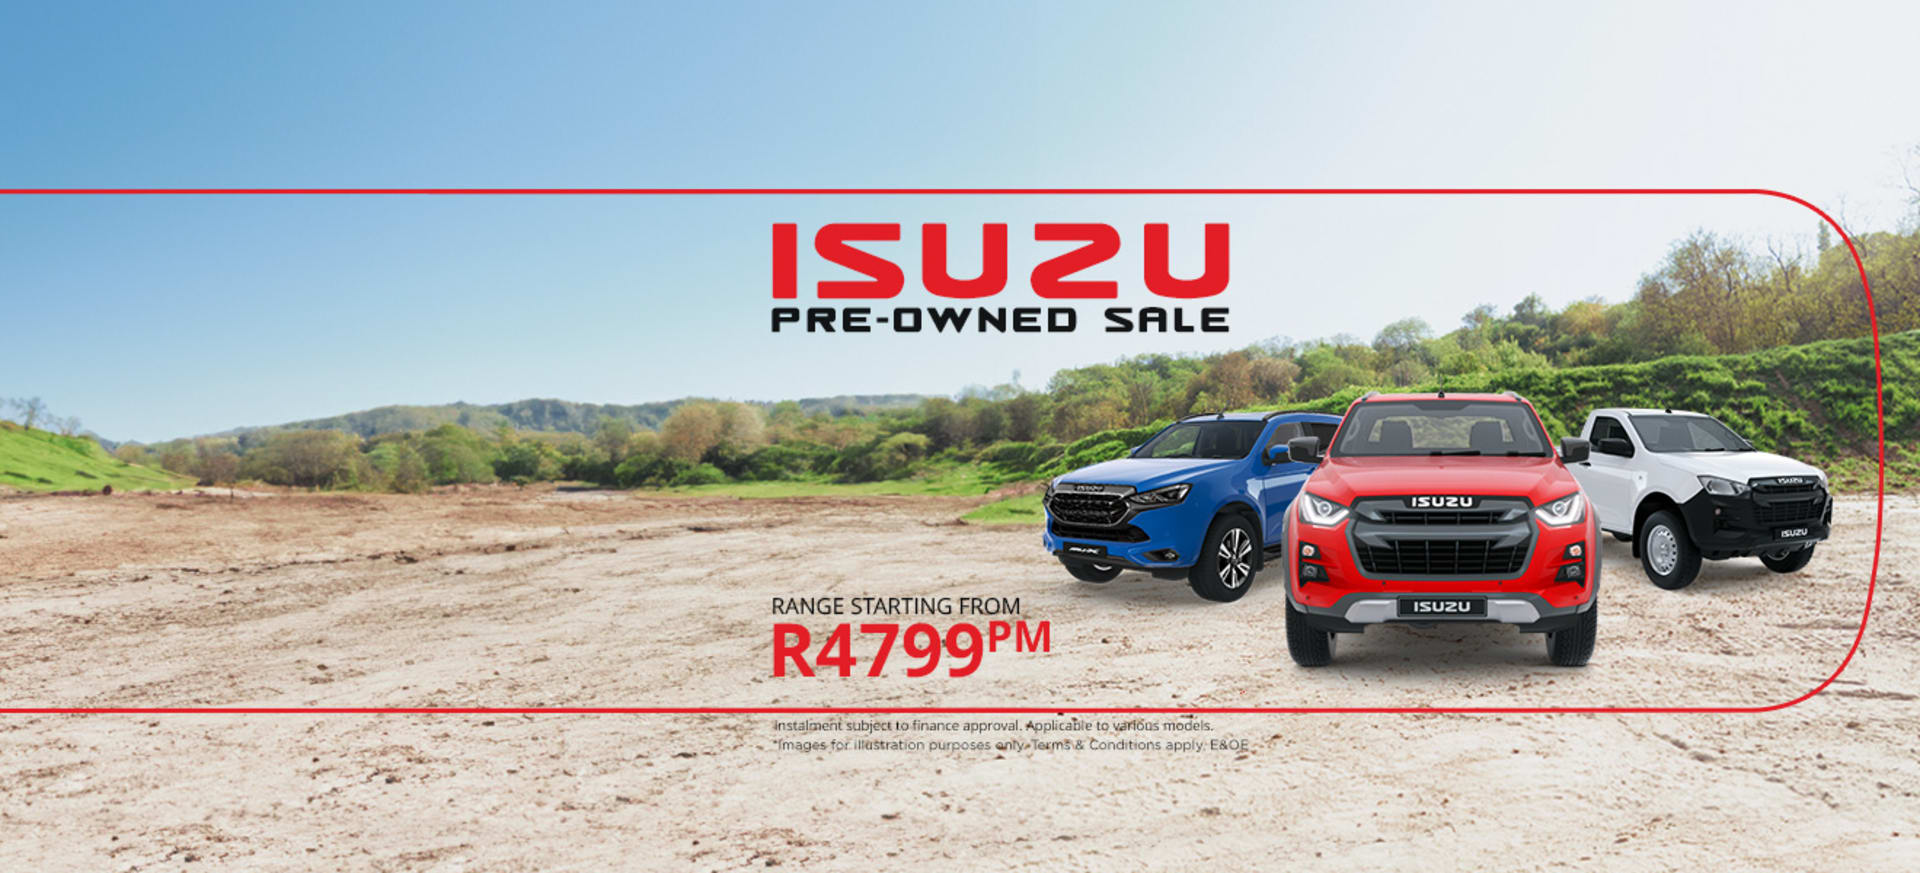 ISUZU pre-owned sale